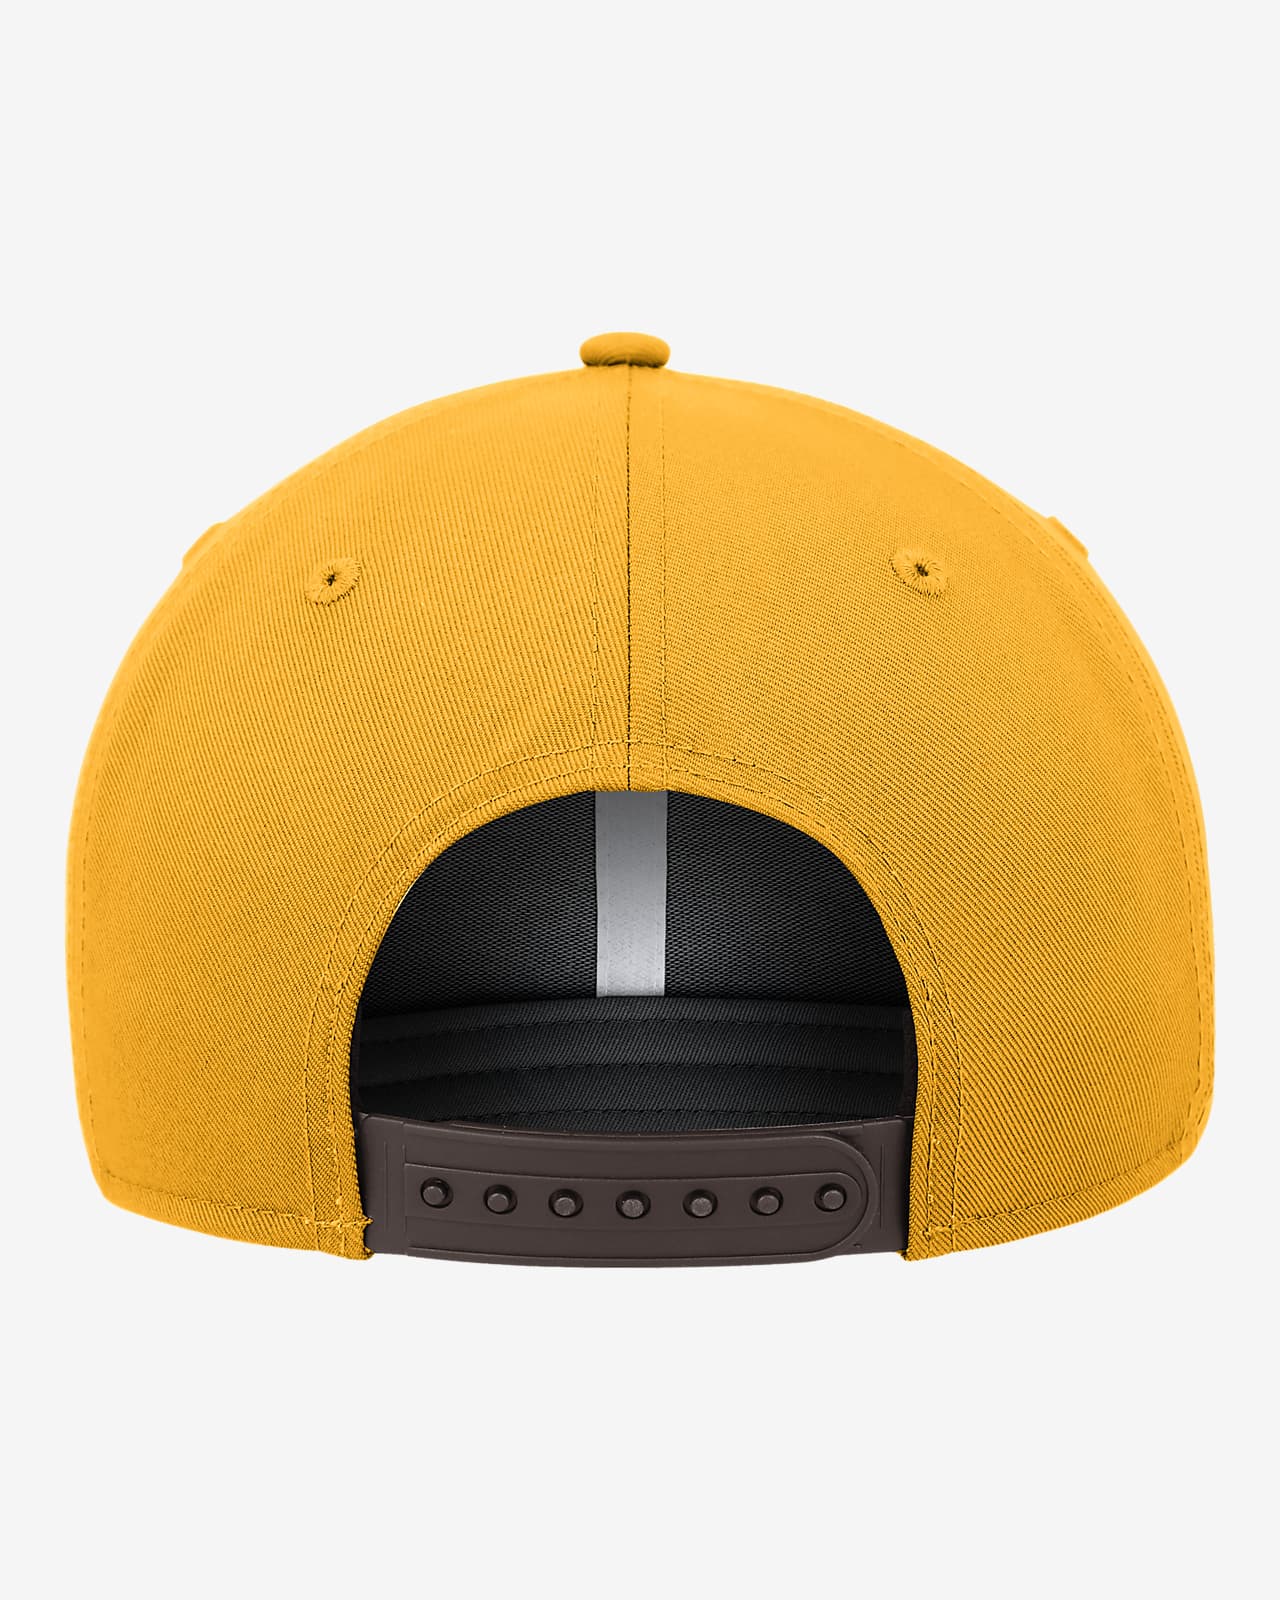 San Diego Padres Classic99 Color Block Men's Nike MLB Adjustable Hat.